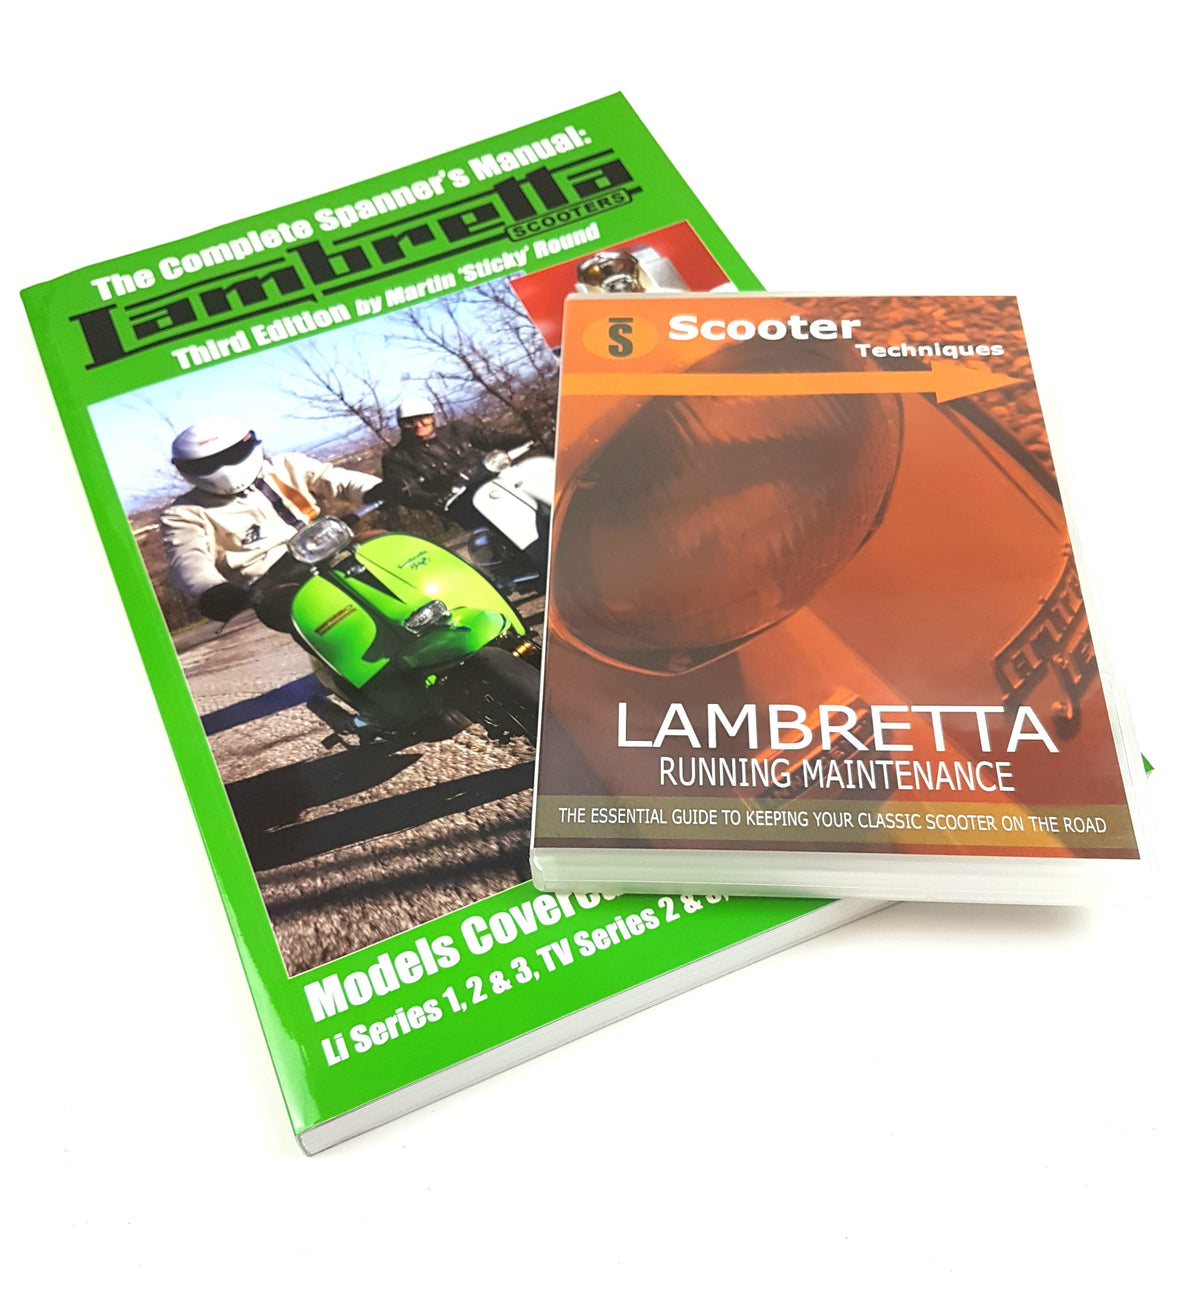 Lambretta Scooter Manual & Maintenance DVD Bundle